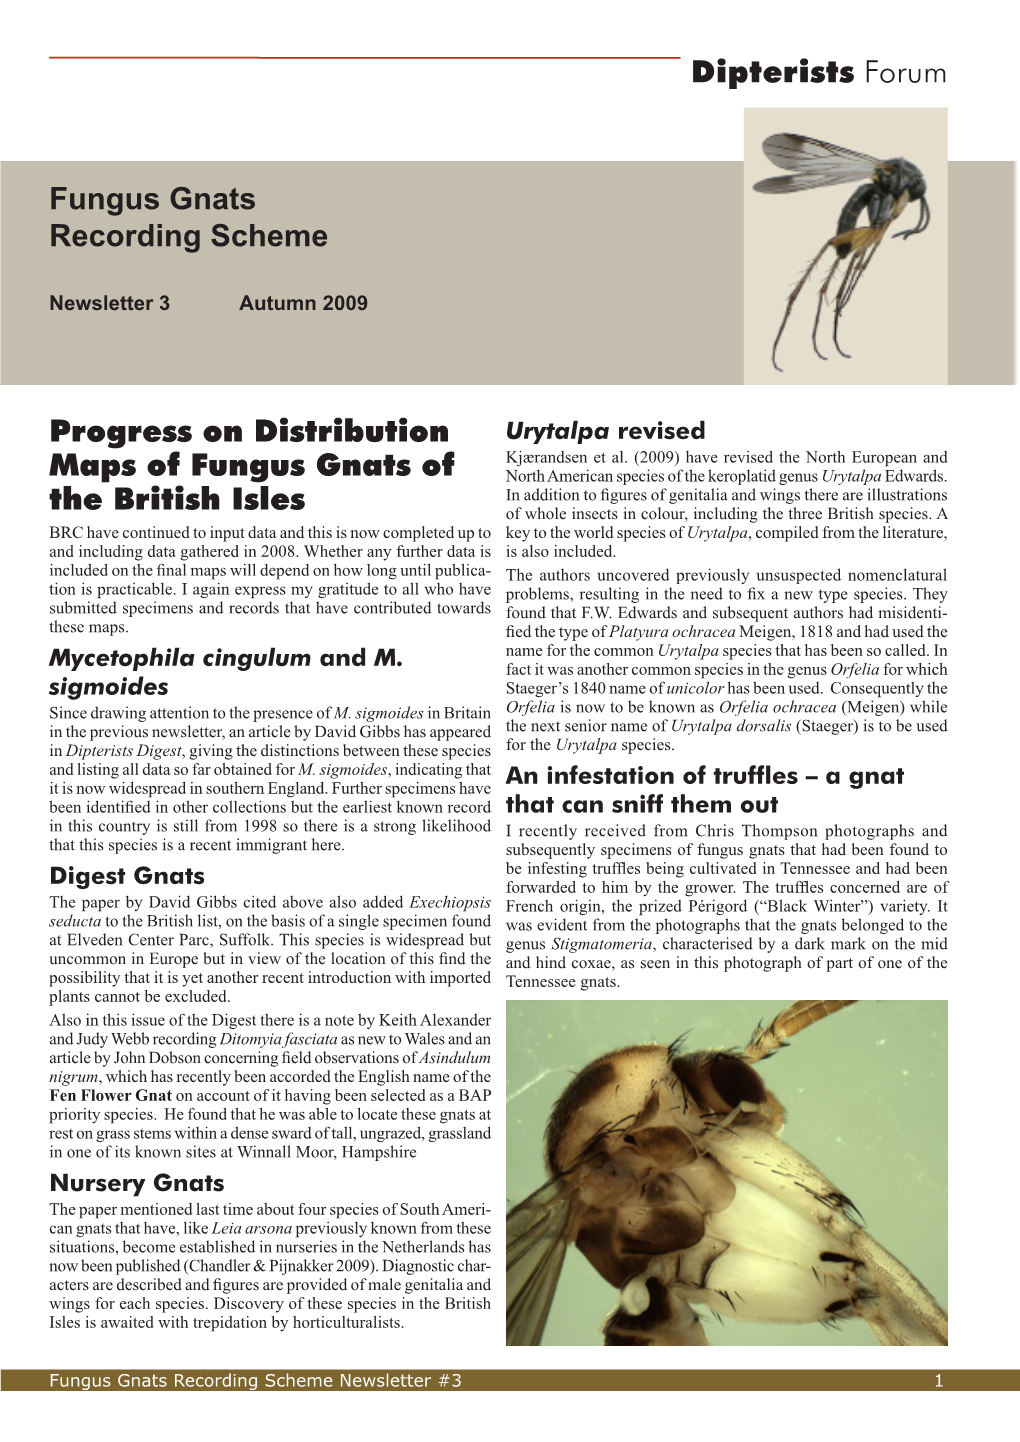 Fungus Gnats Recording Scheme Newsletter #3